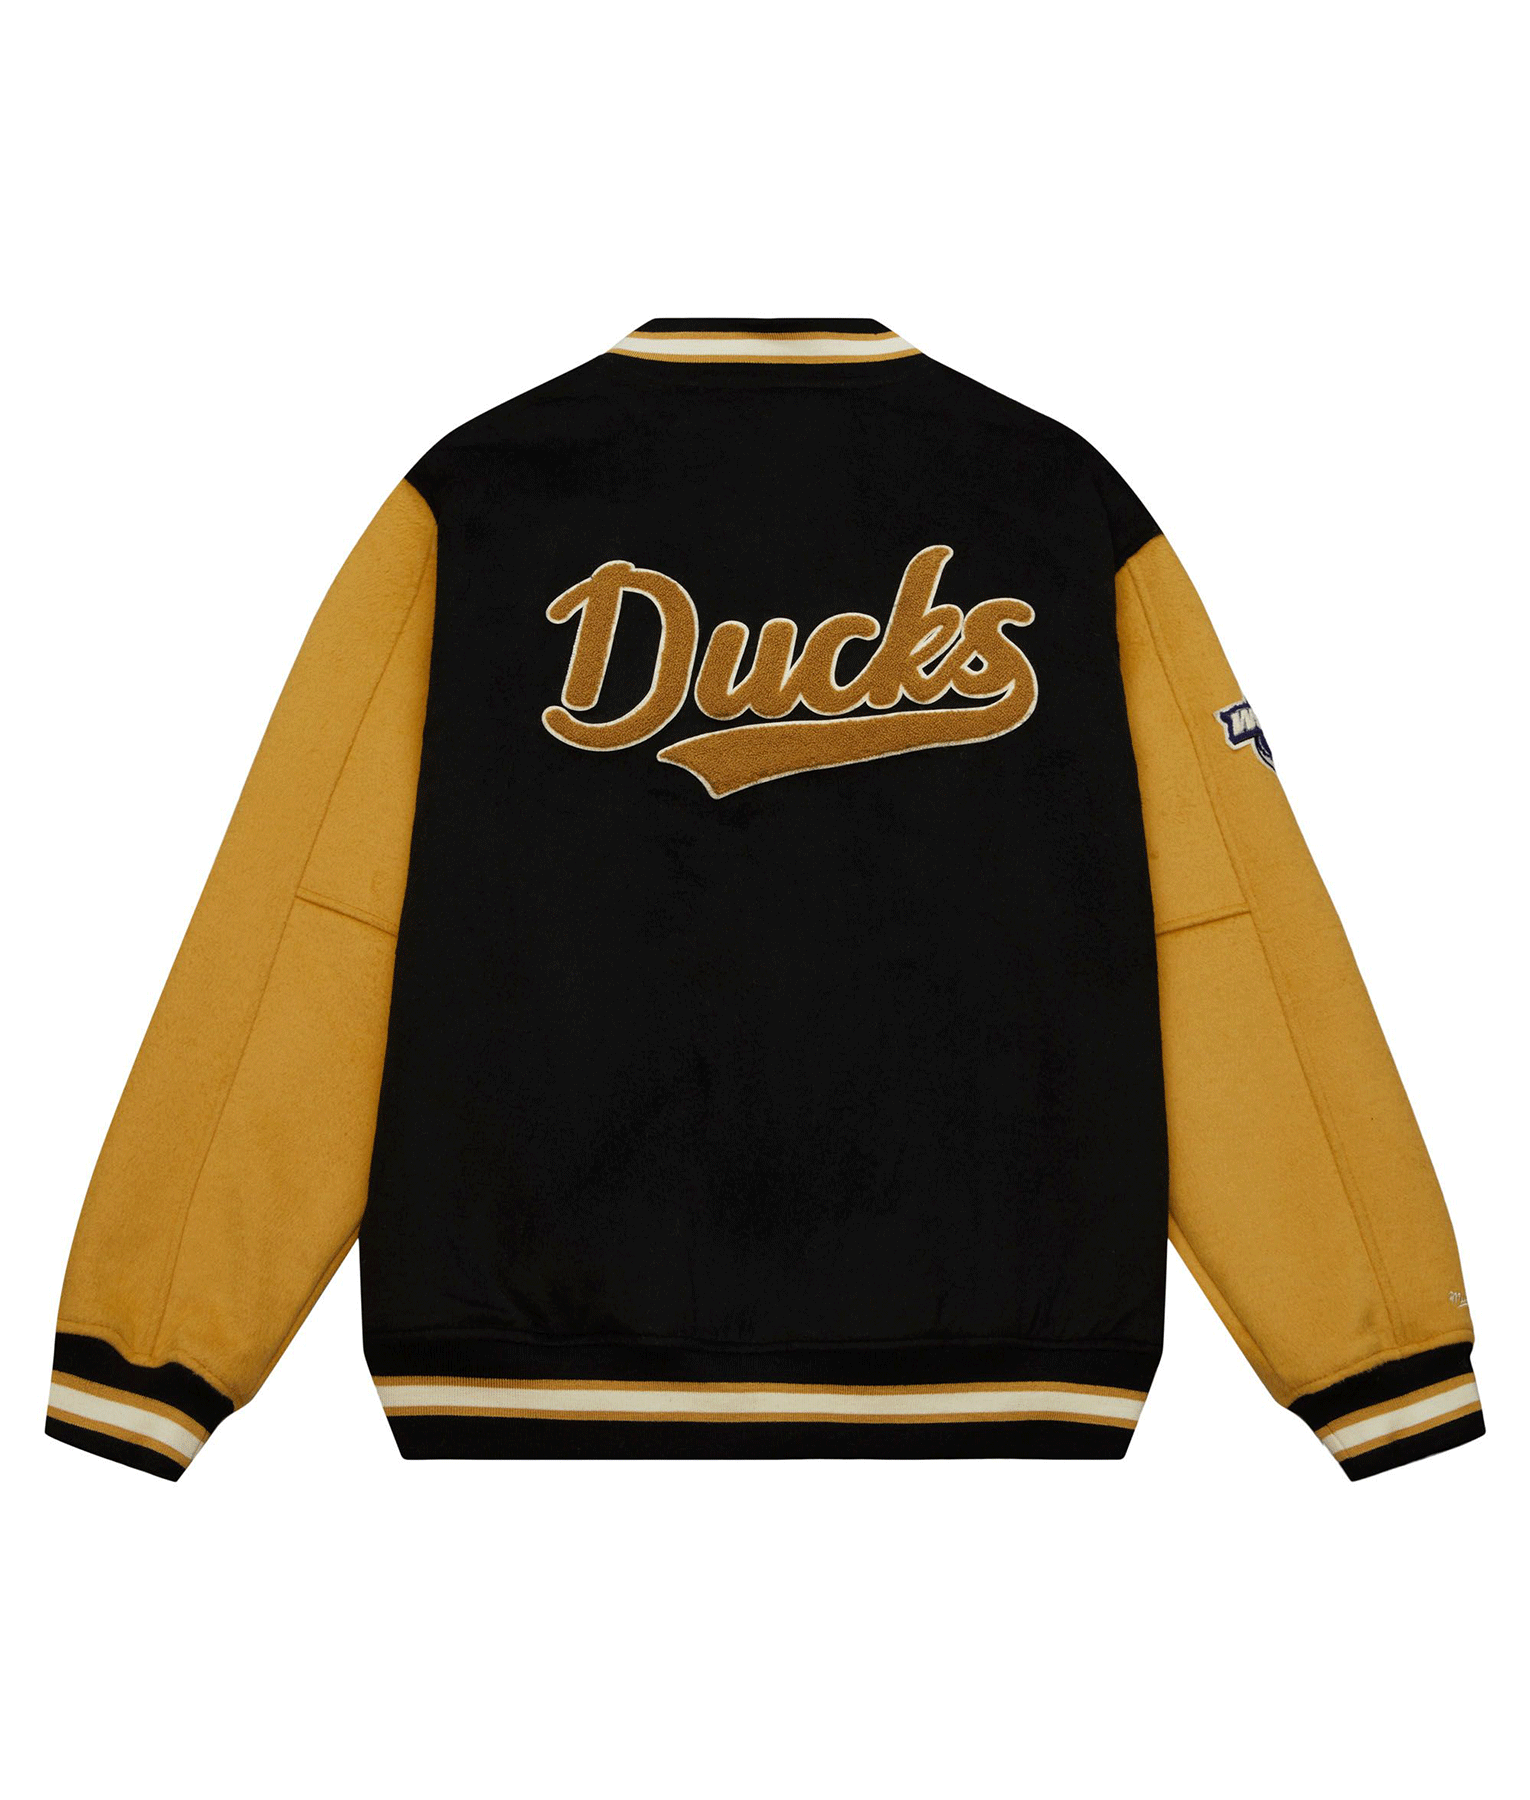 Anaheim Ducks Black Varsity Jacket (3)